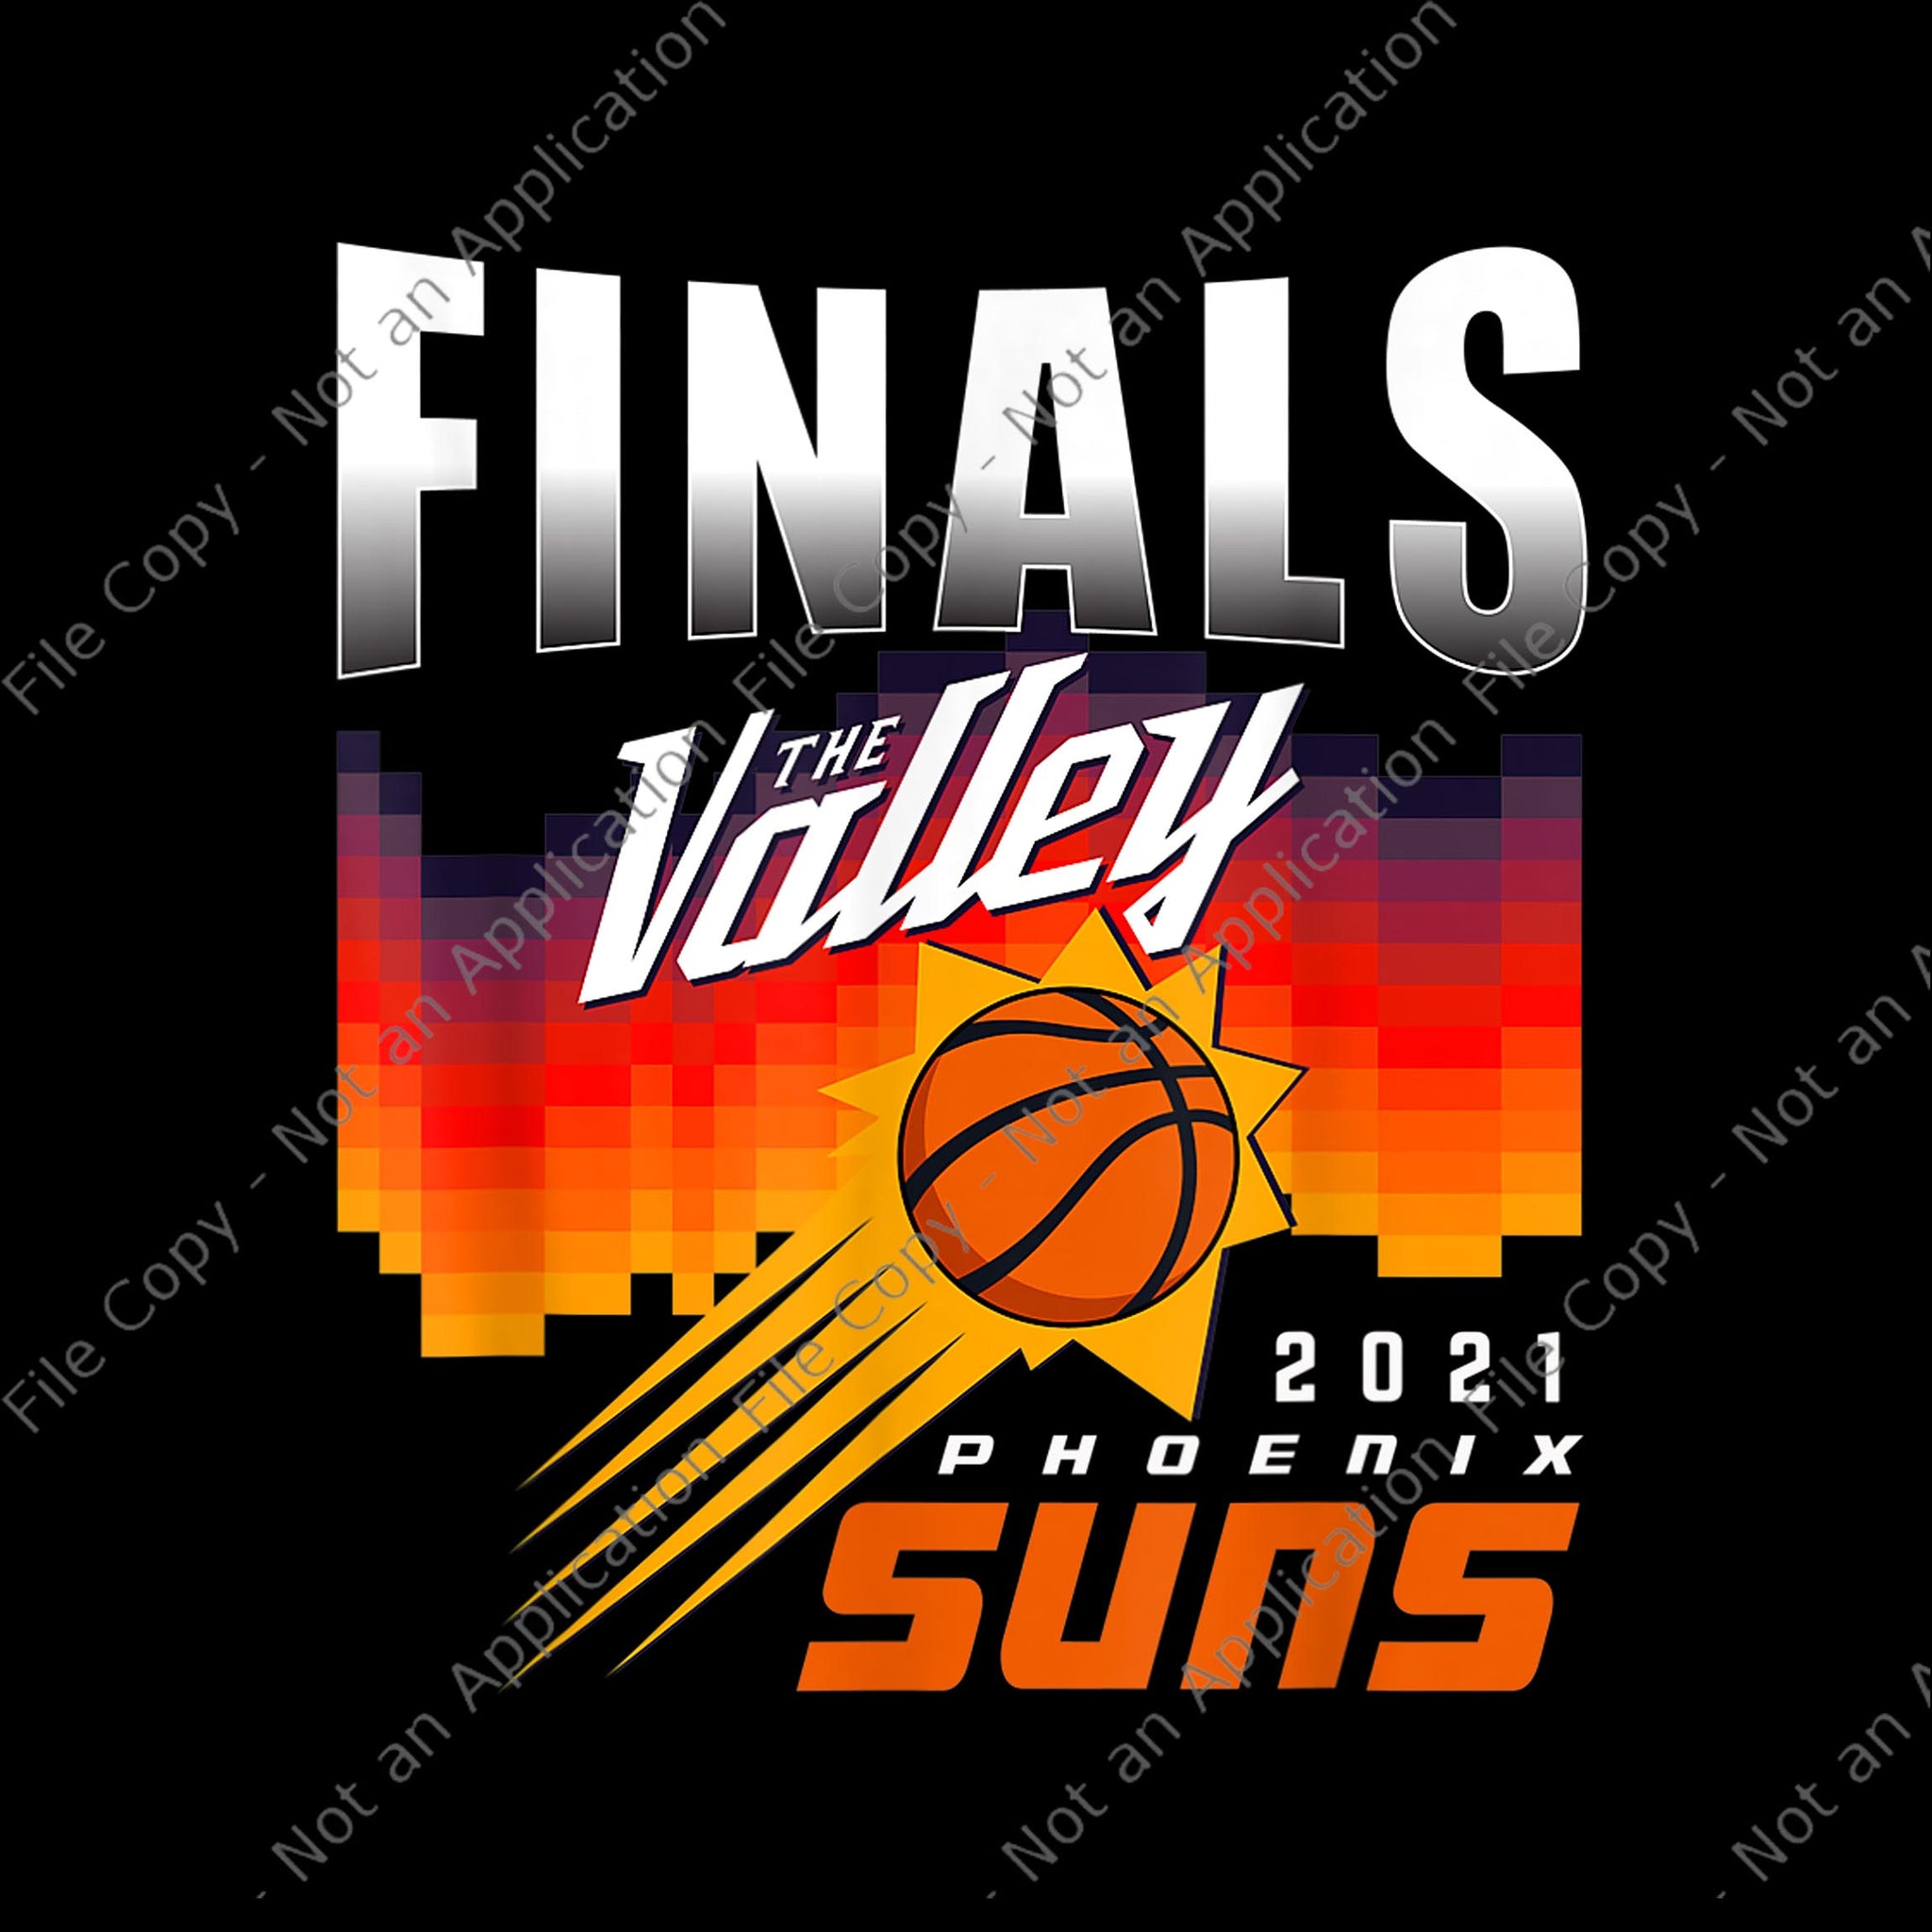 Phoenix Basketball Retro Sun Sports Valley of the Sun PHX Rally at